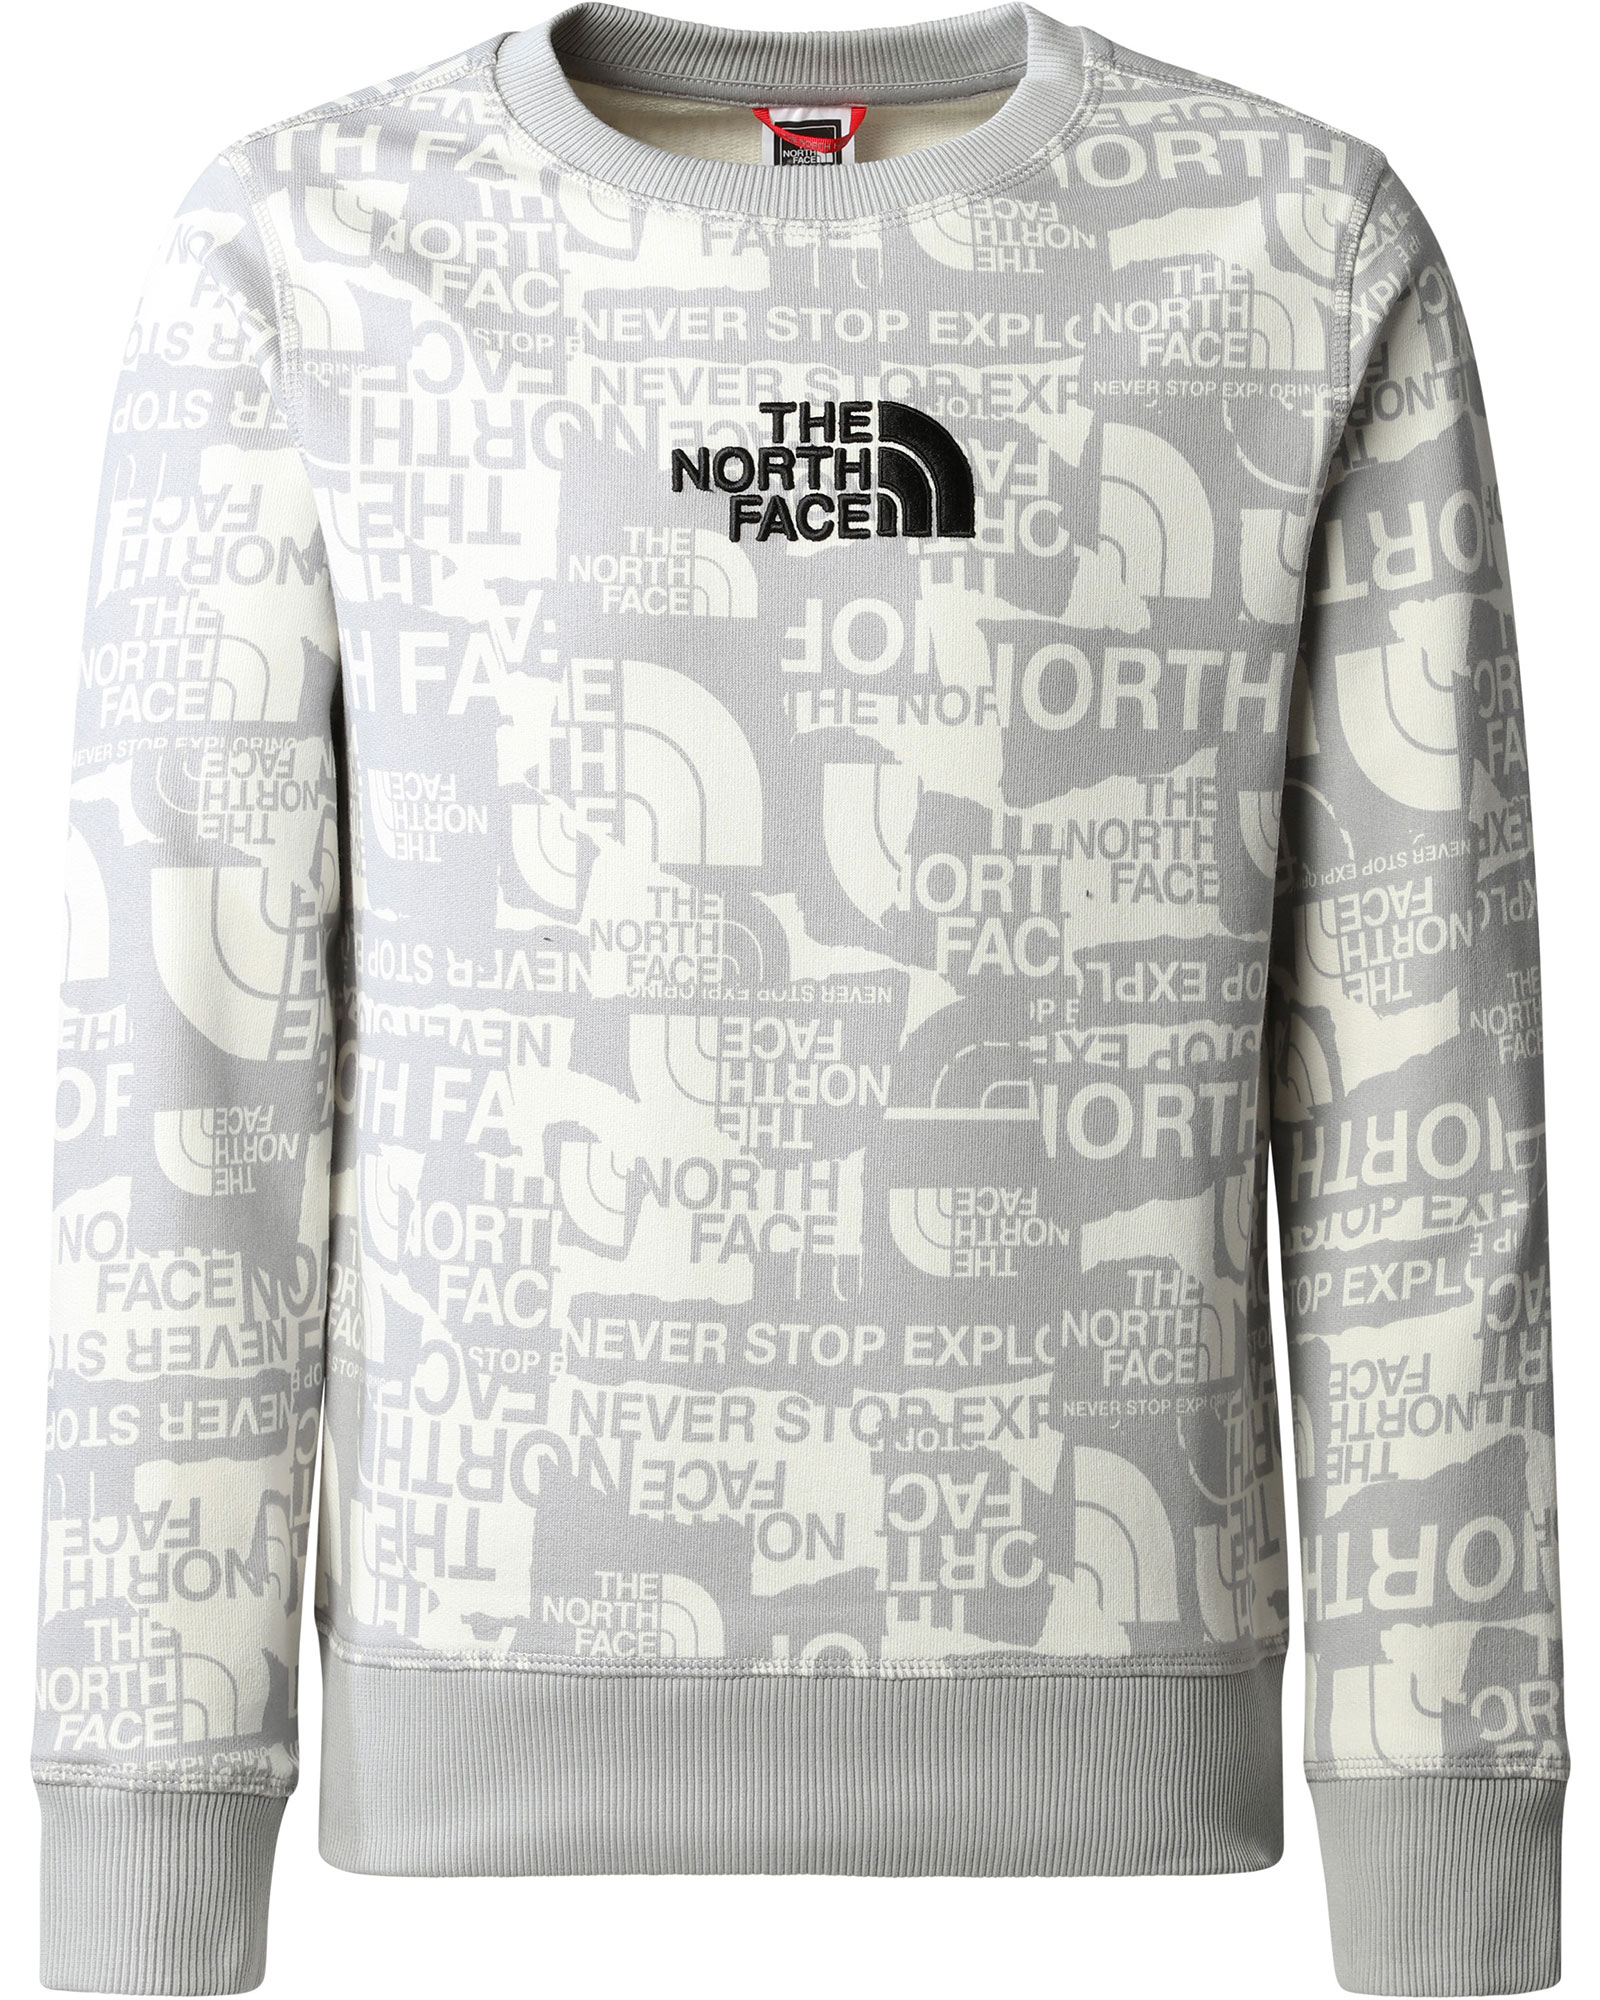 The North Face Boys Drew Peak Light Crew T-shirt